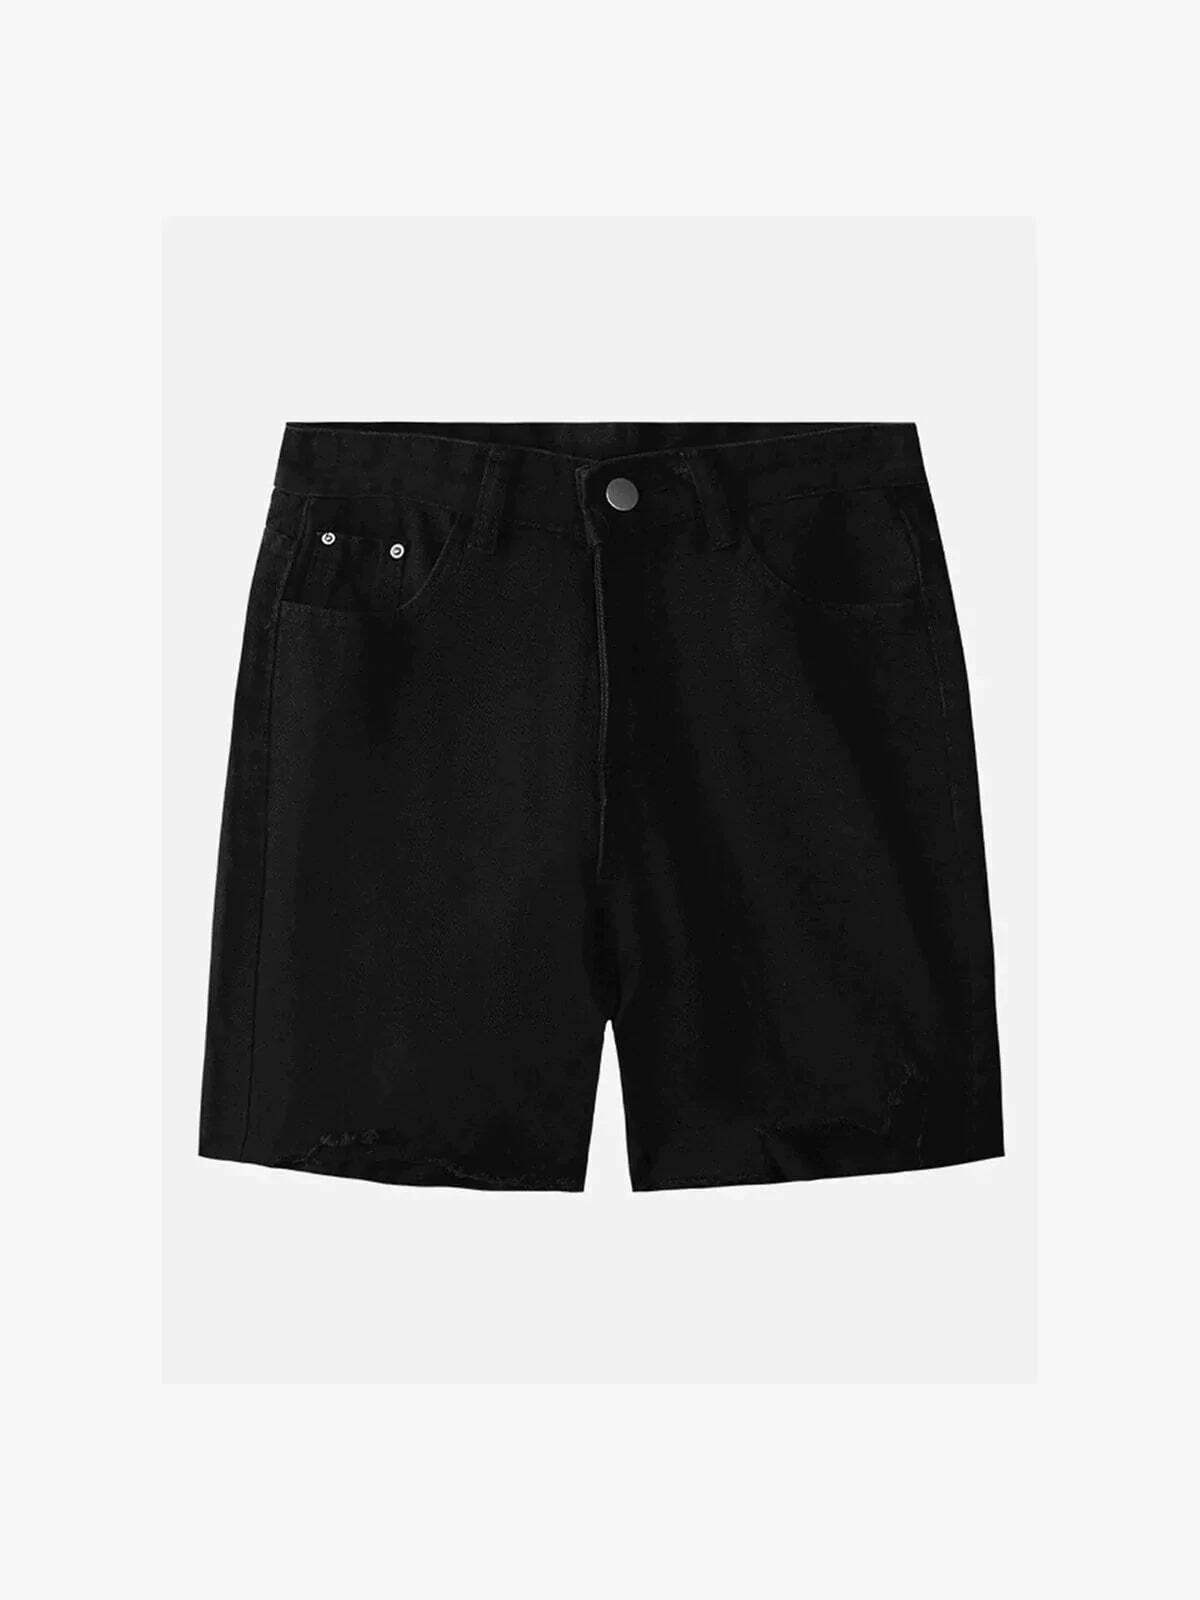 slim fit solid color shorts urban streetwear essential 6970